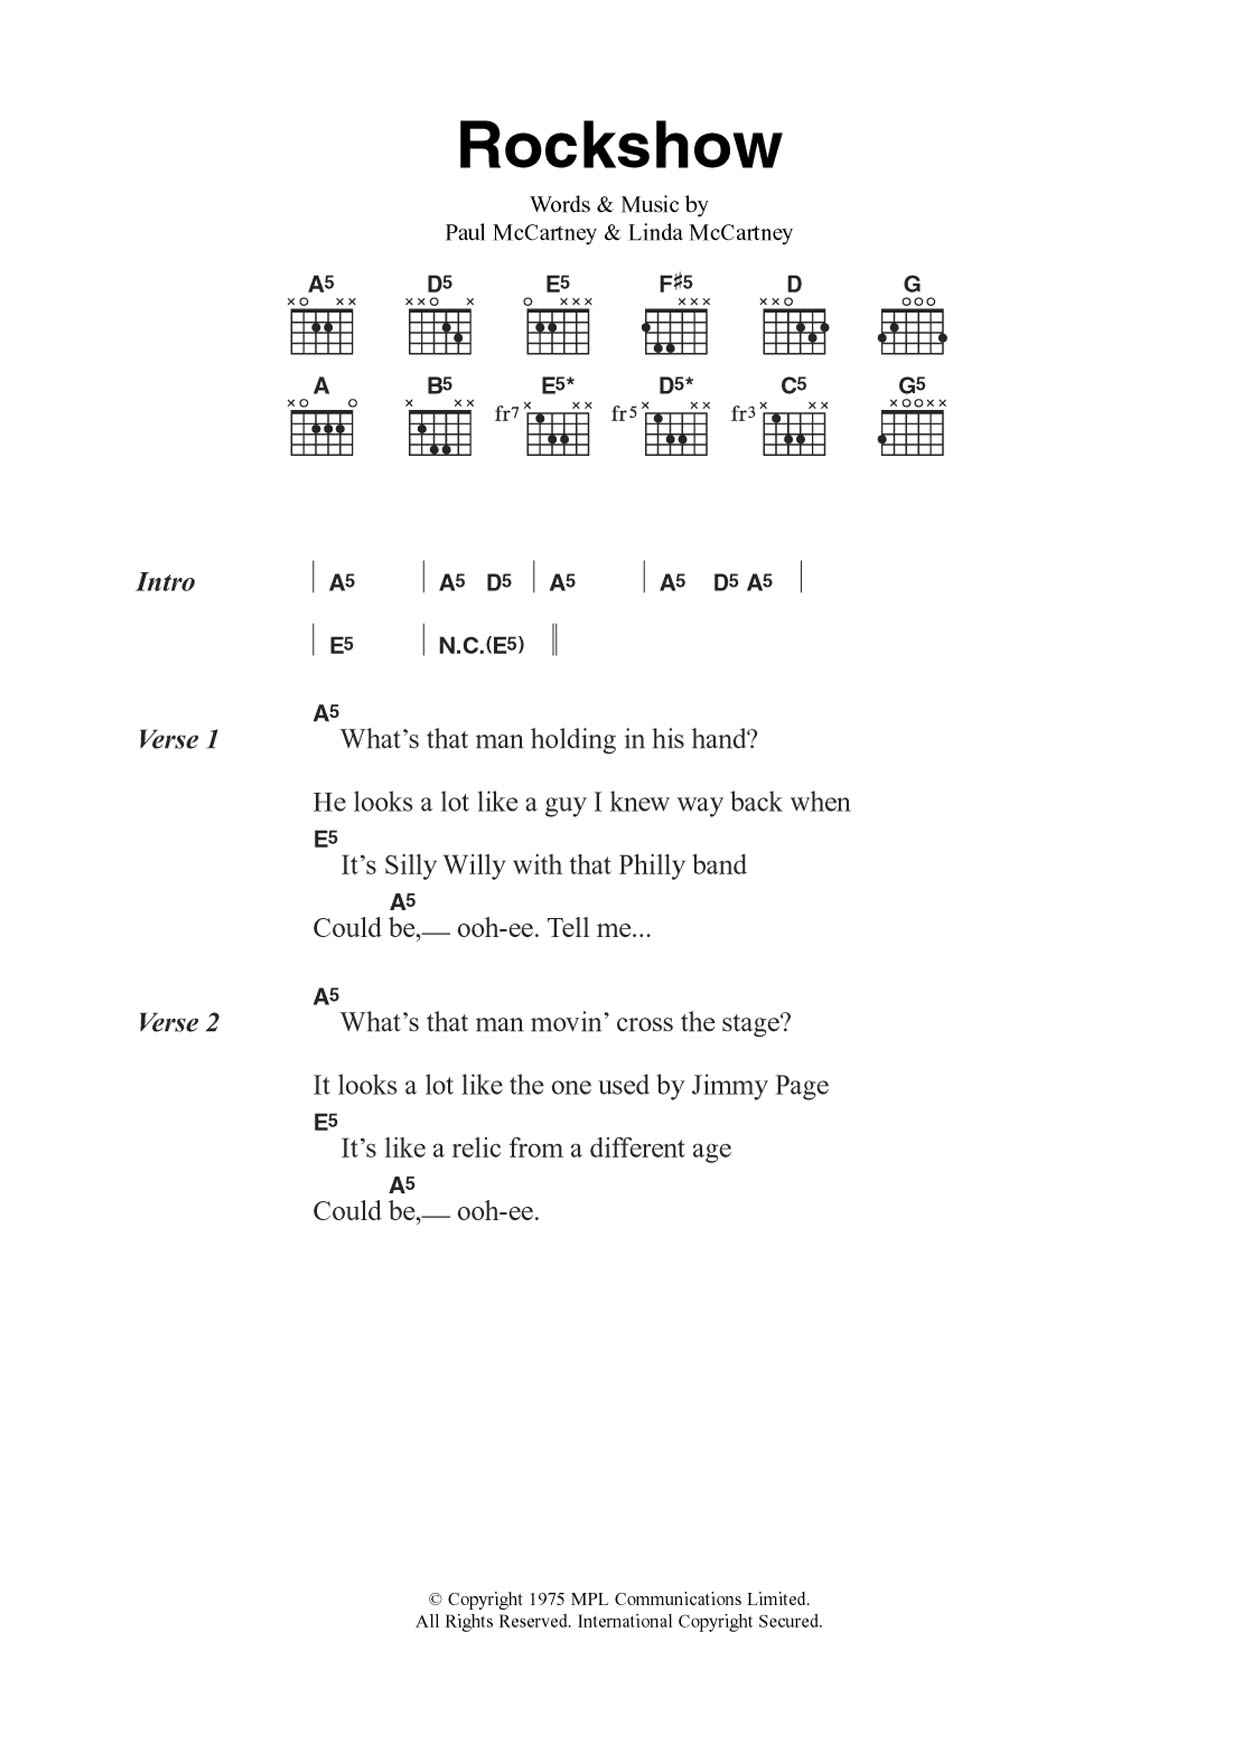 Wings Rockshow Sheet Music Notes & Chords for Guitar Chords/Lyrics - Download or Print PDF